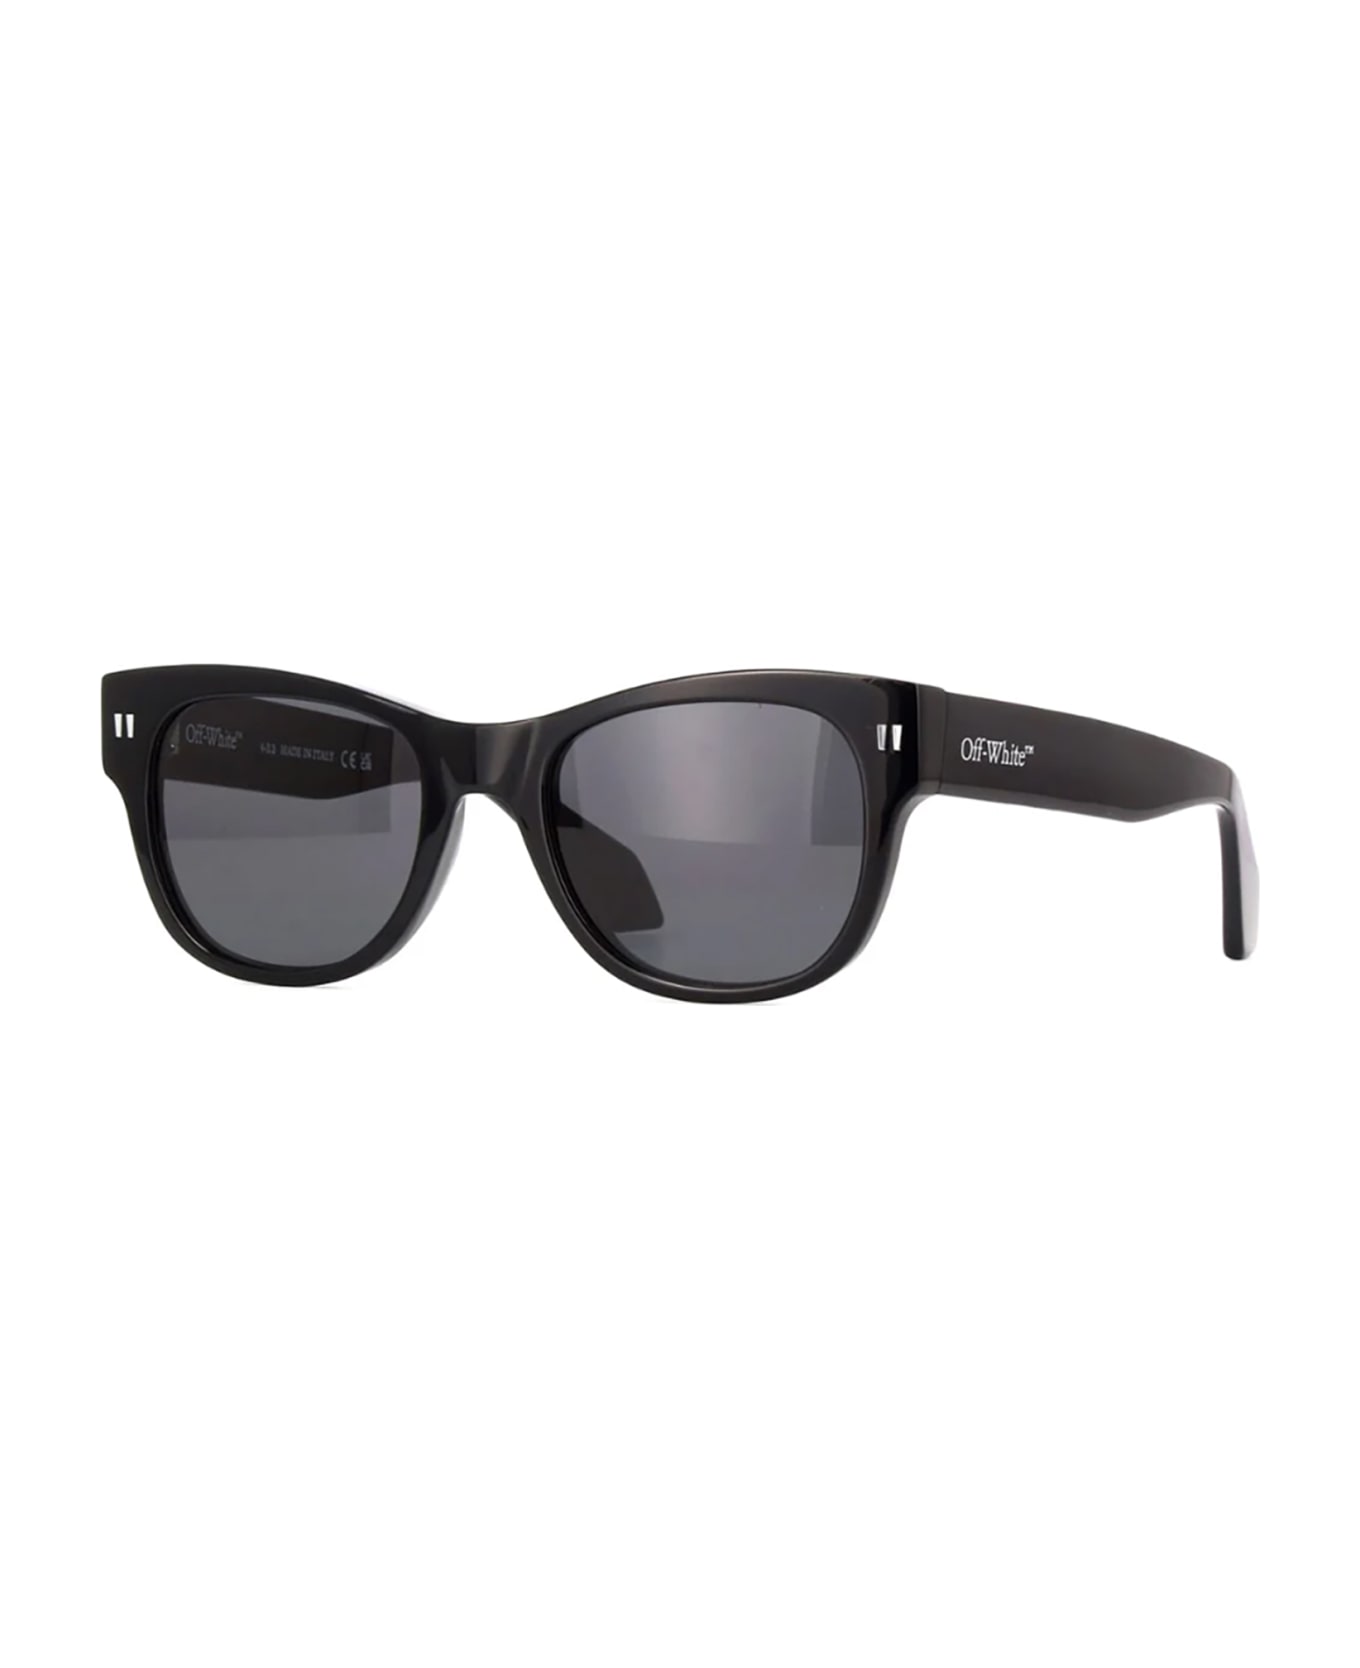 Off-White OERI107 MOAB Sunglasses - Black